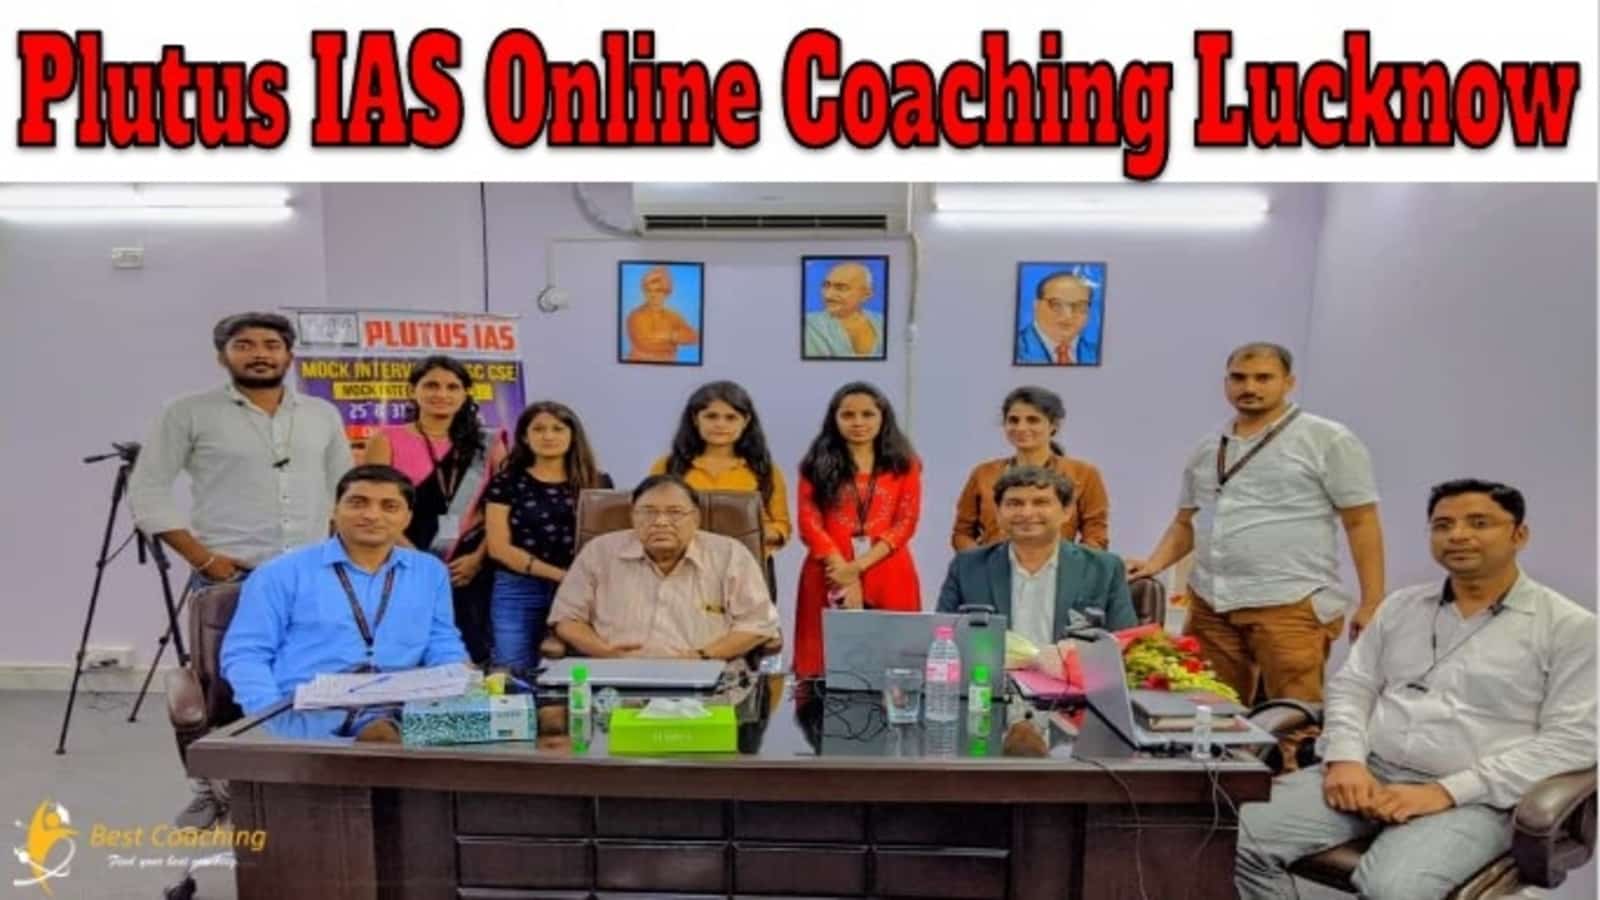 Plutus IAS Online Coaching Lucknow